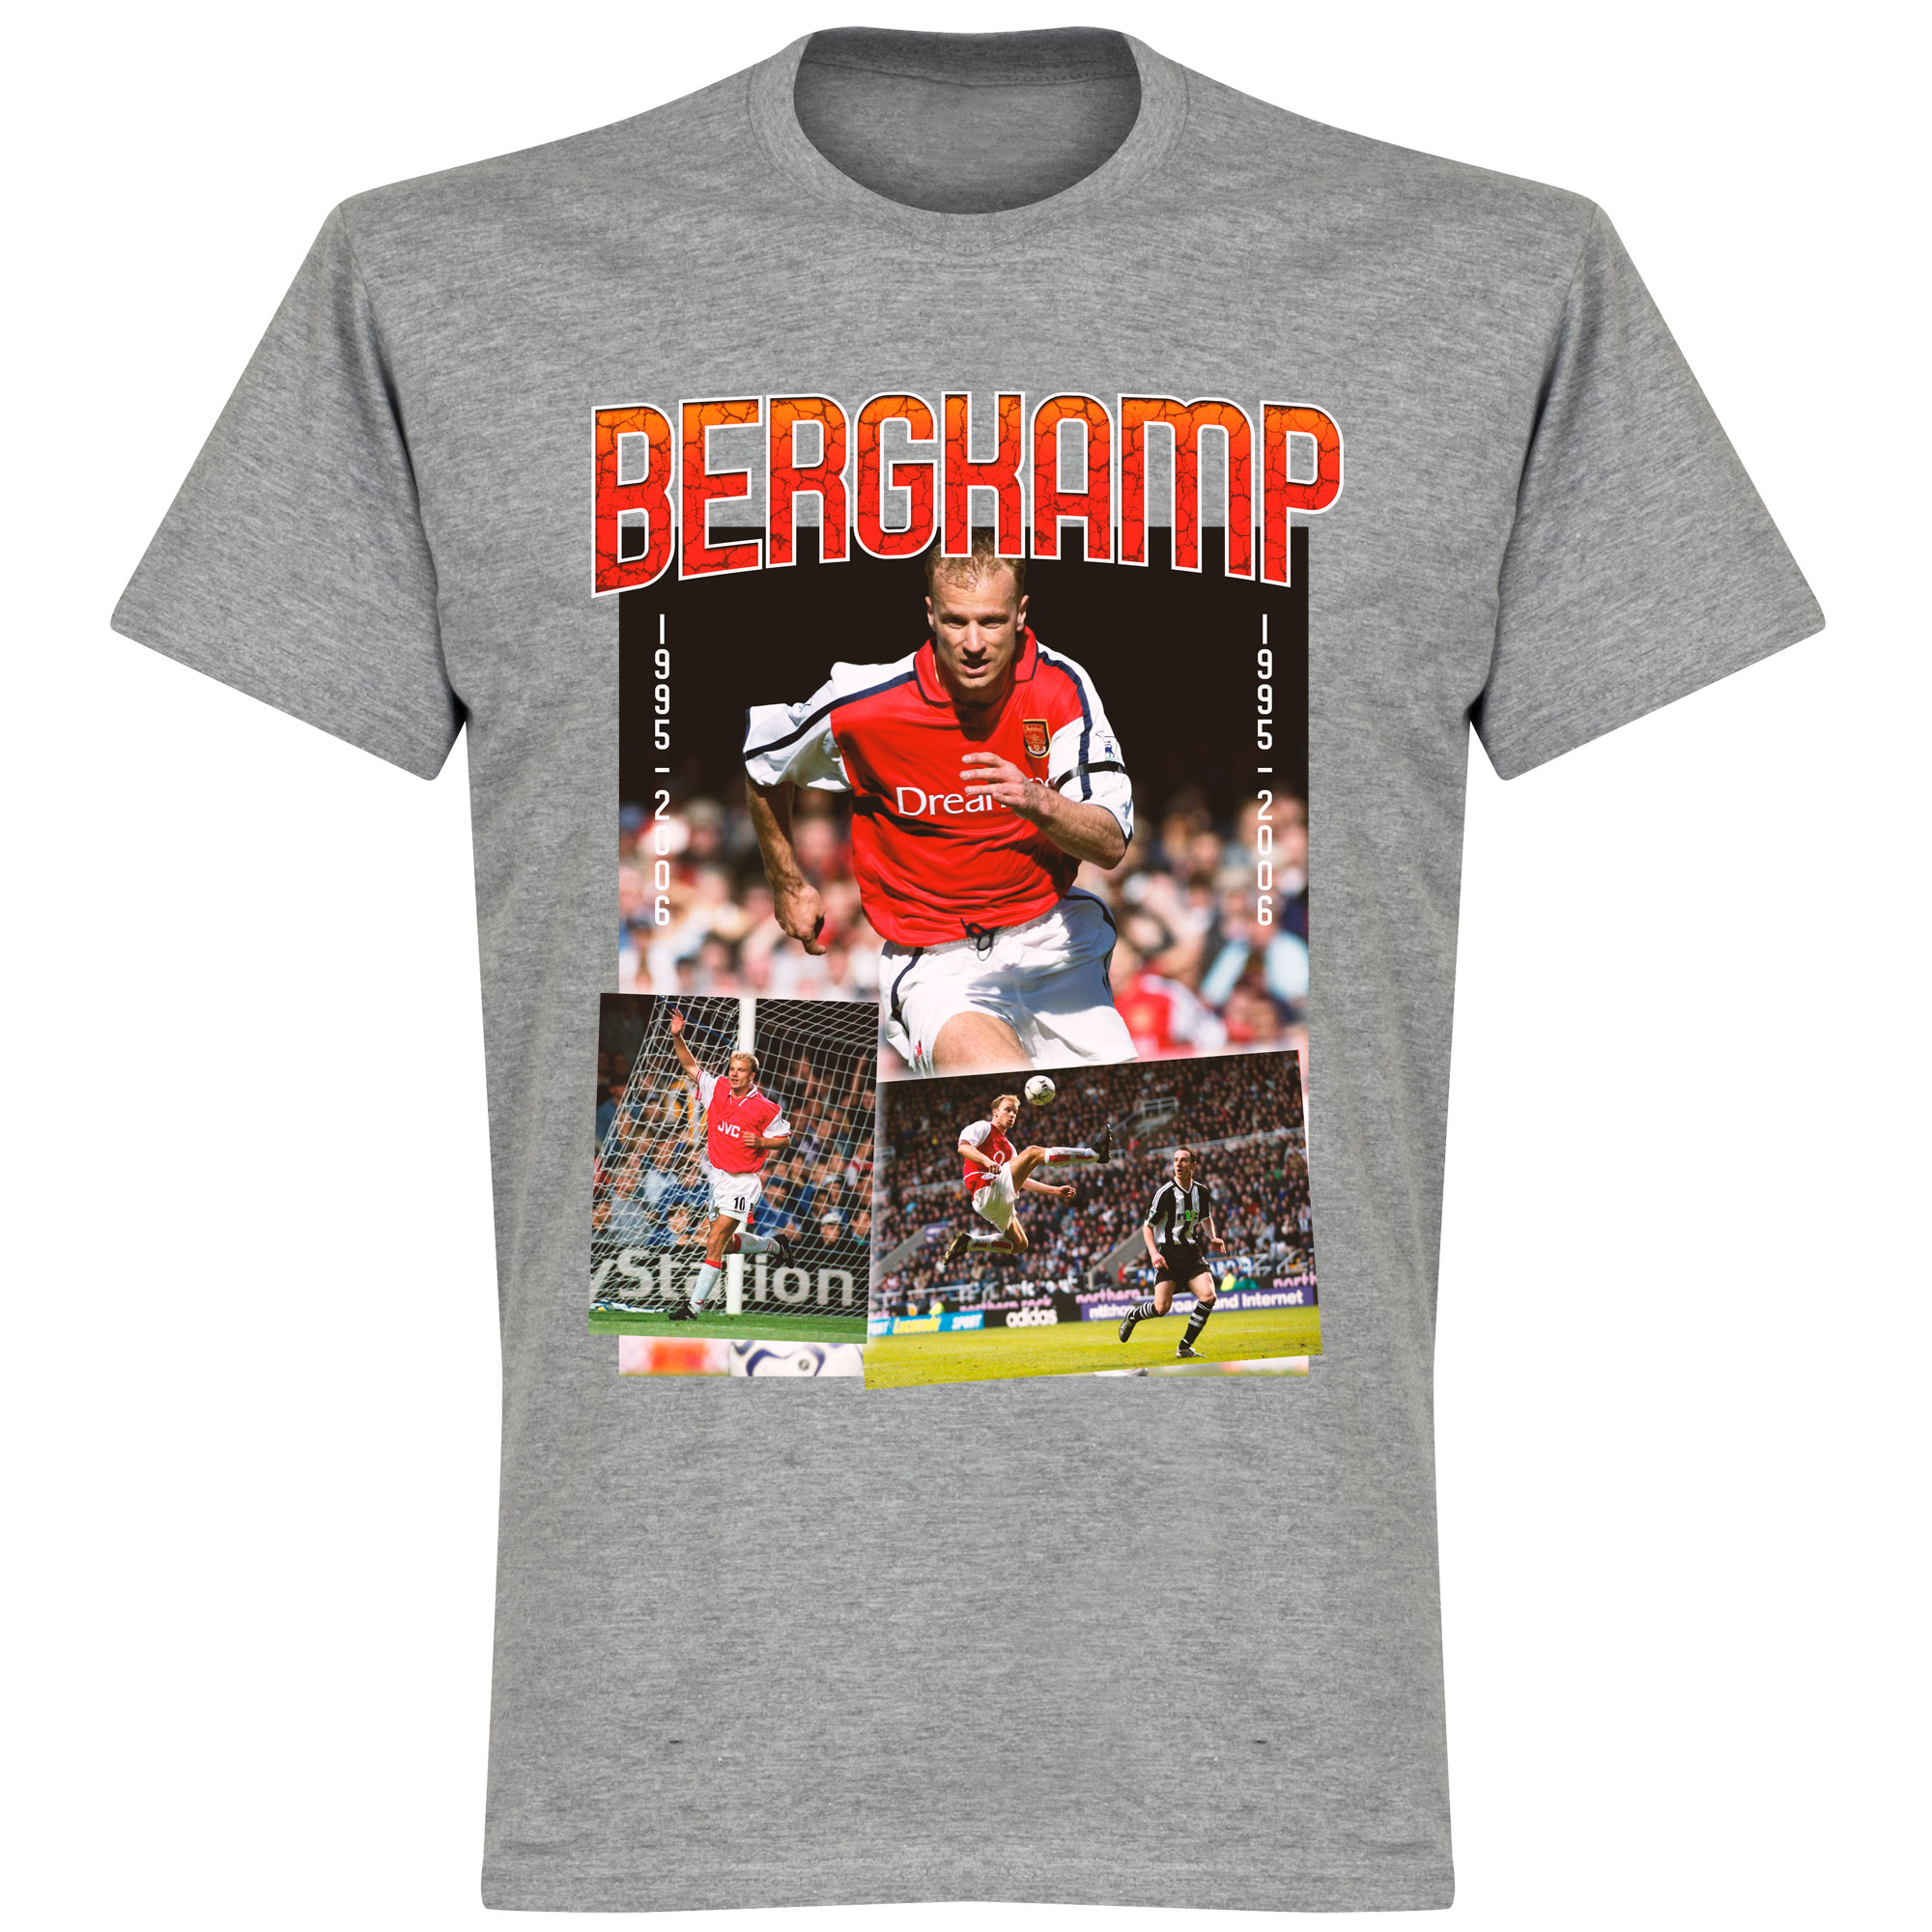 Bergkamp Arsenal Old Skool T-Shirt - Grijs - XXXL